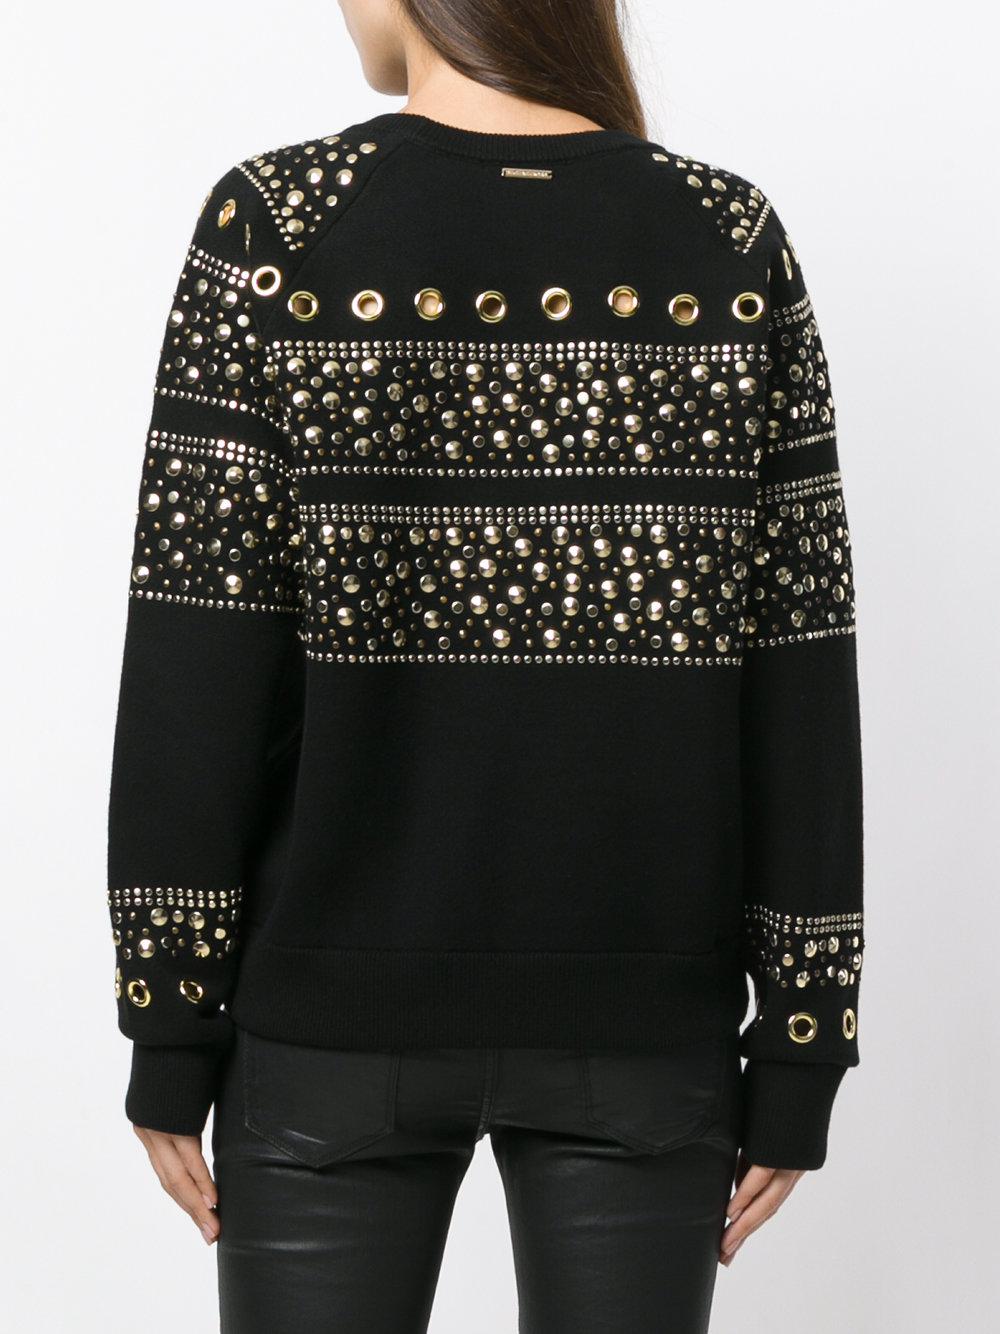 MICHAEL Michael Kors Cotton Studded Sweatshirt in Black - Lyst